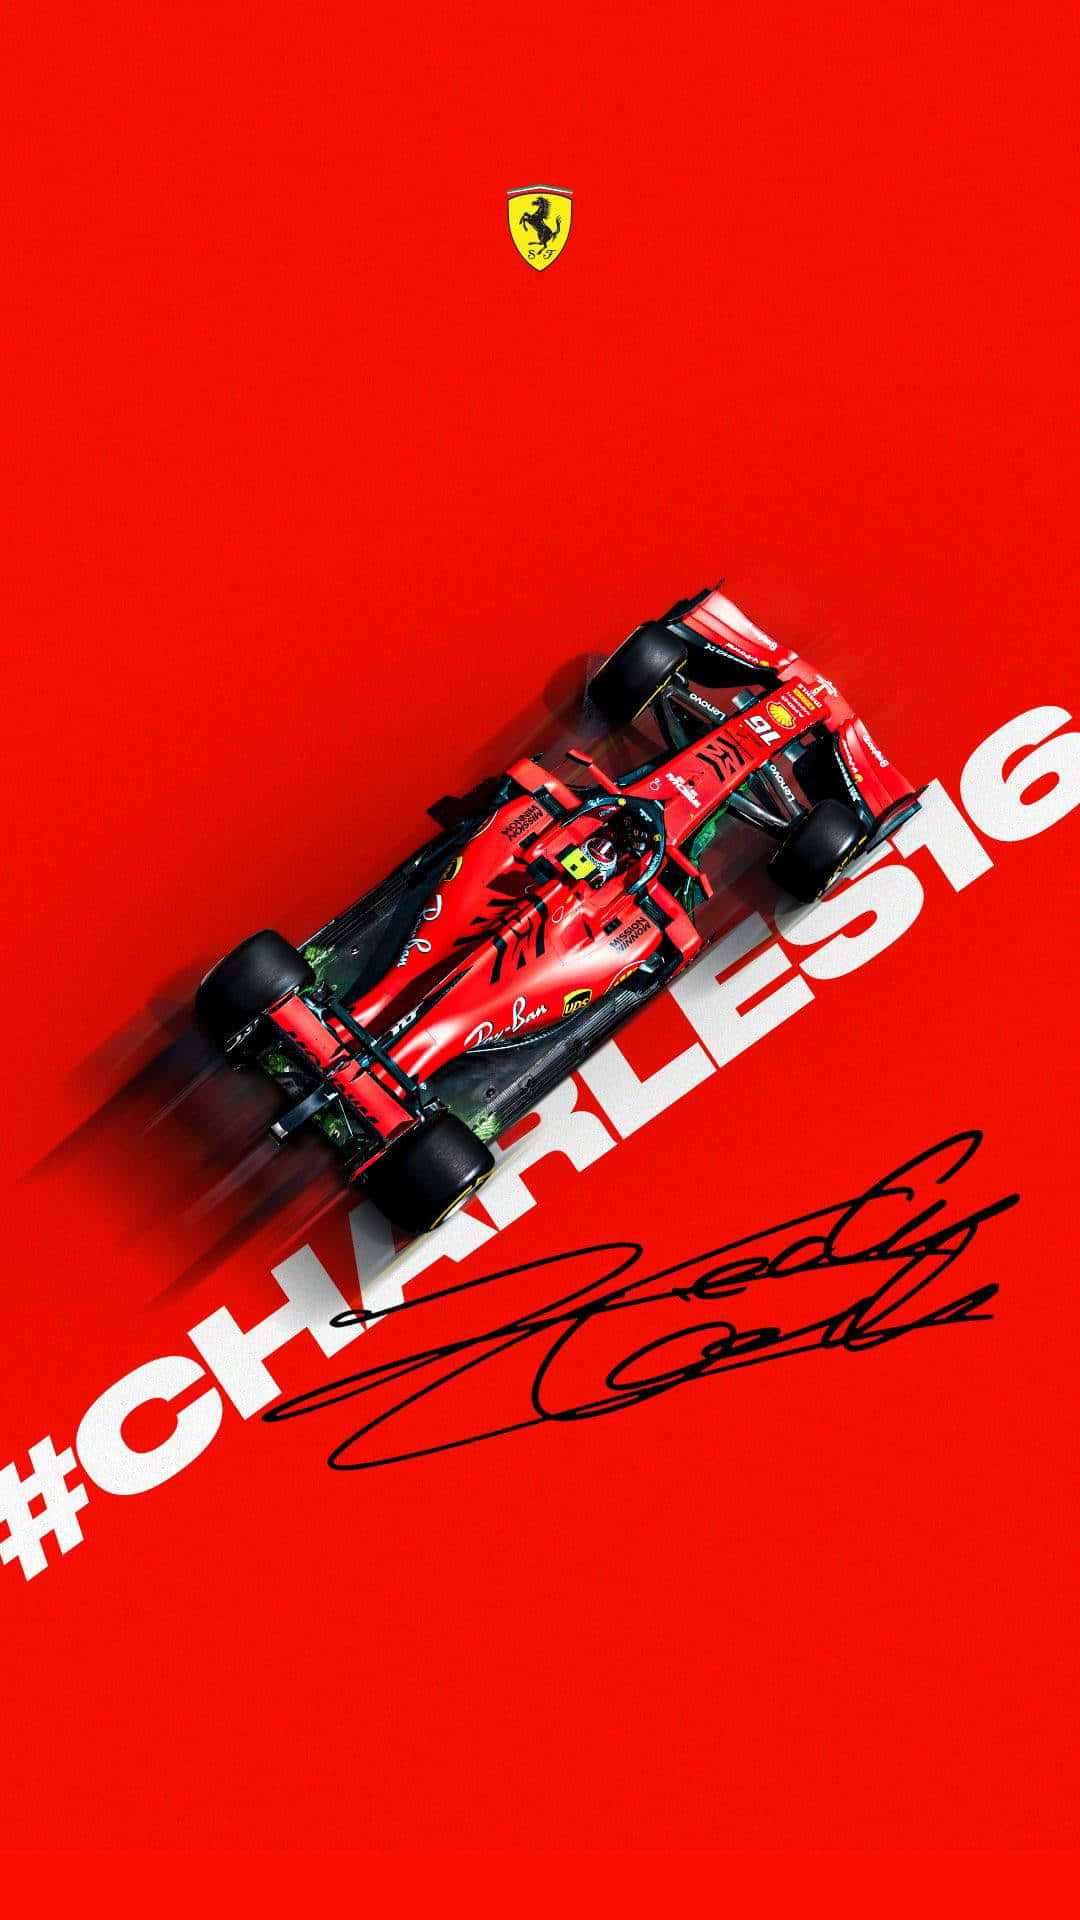 Speed Matters at the Formula 1 Grand Prix Wallpaper